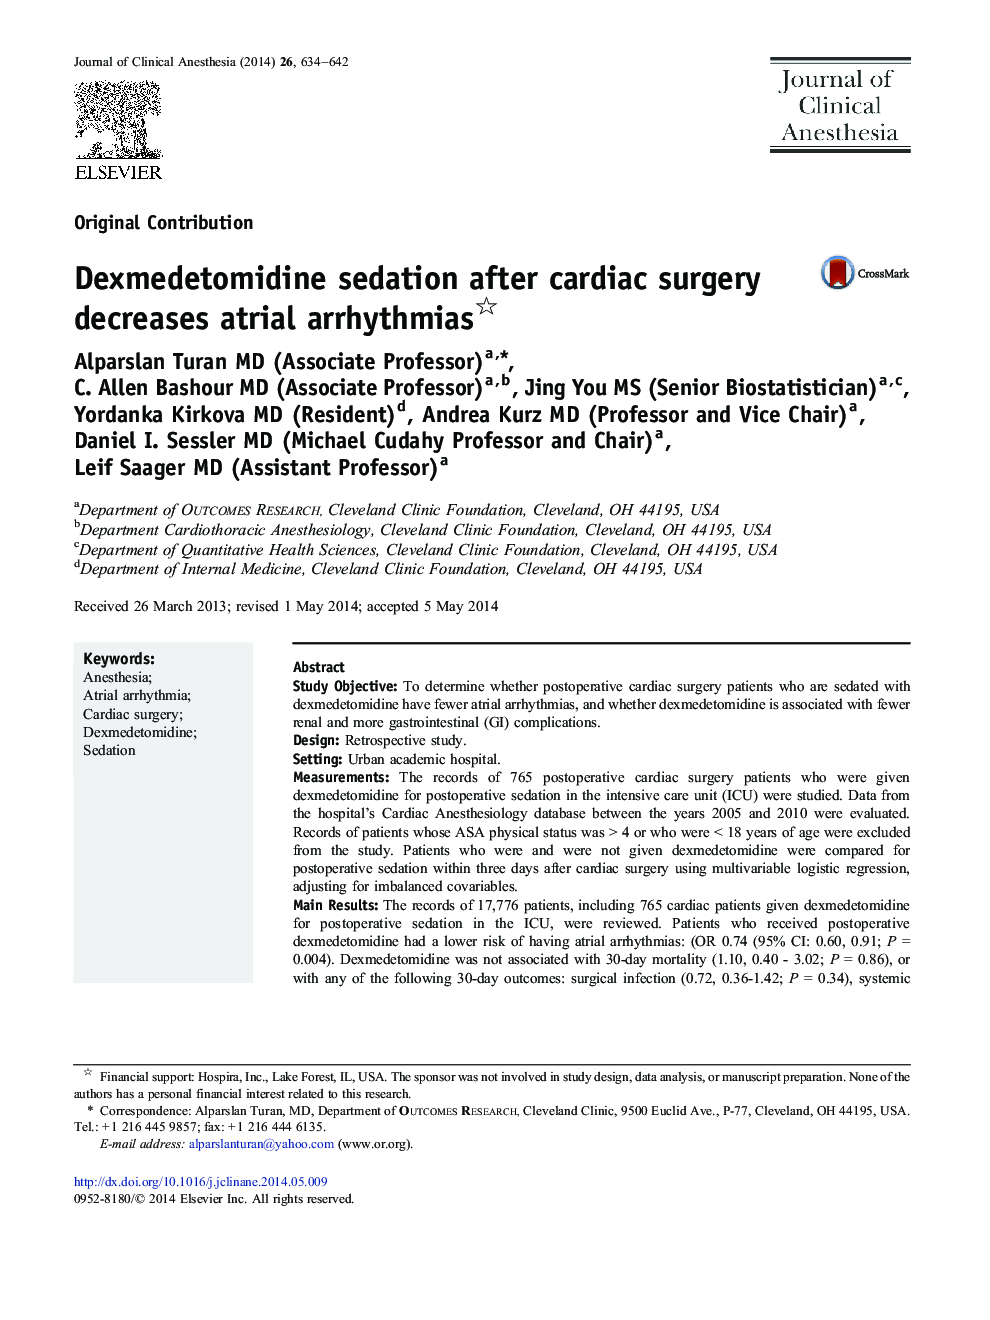 Dexmedetomidine sedation after cardiac surgery decreases atrial arrhythmias 